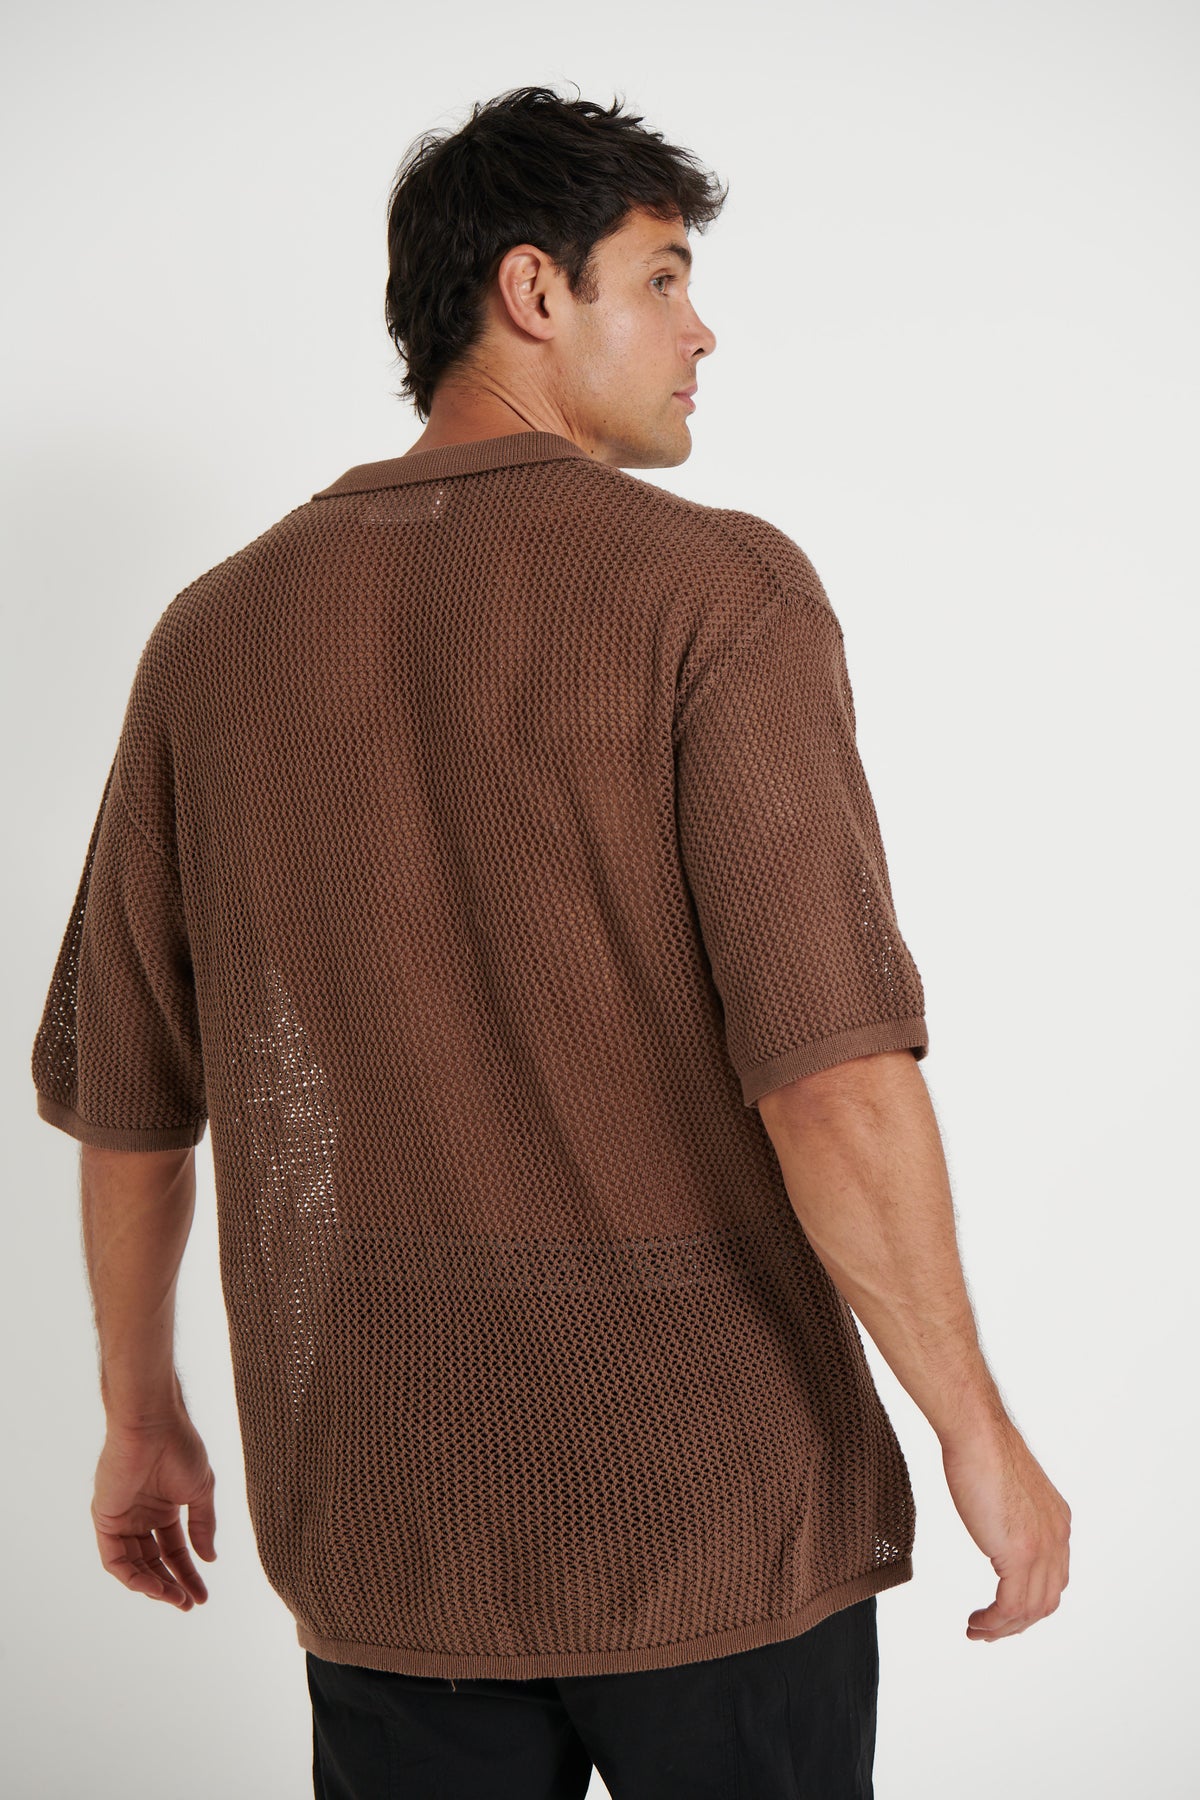 NTH Crochet Knit Shirt Choc - FINAL SALE